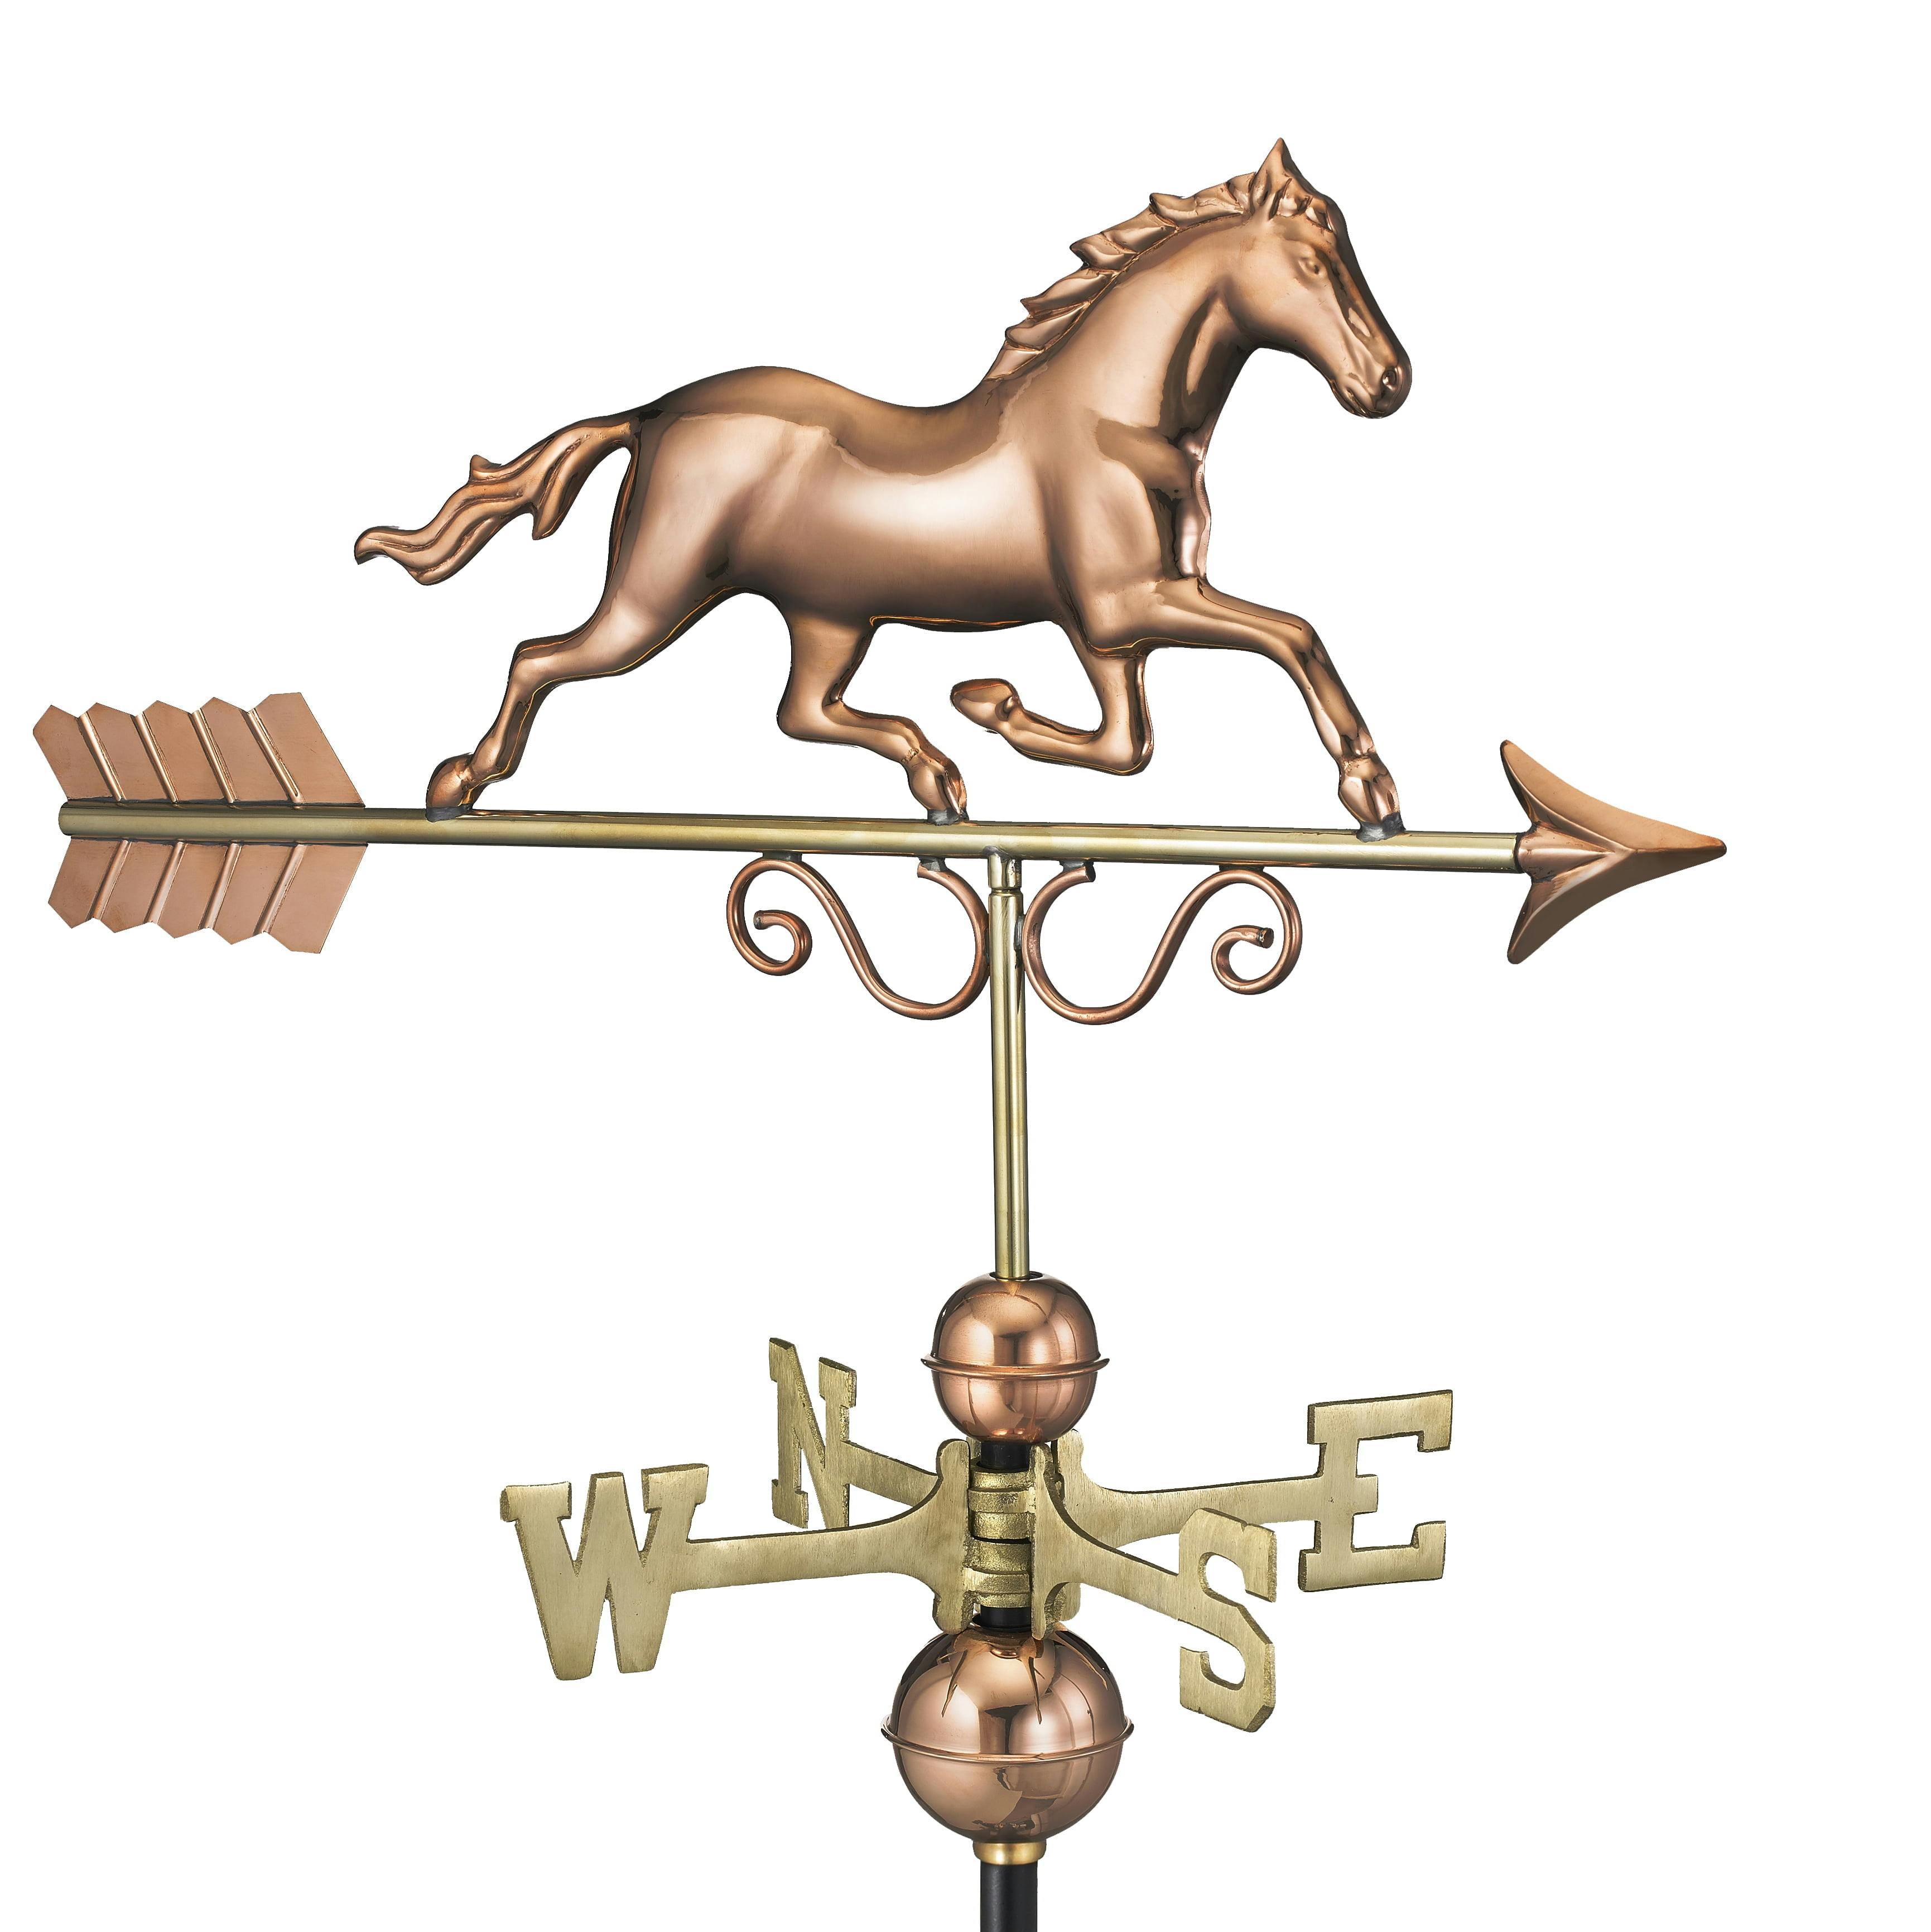 Galloping Horse 33" Pure Copper Weathervane